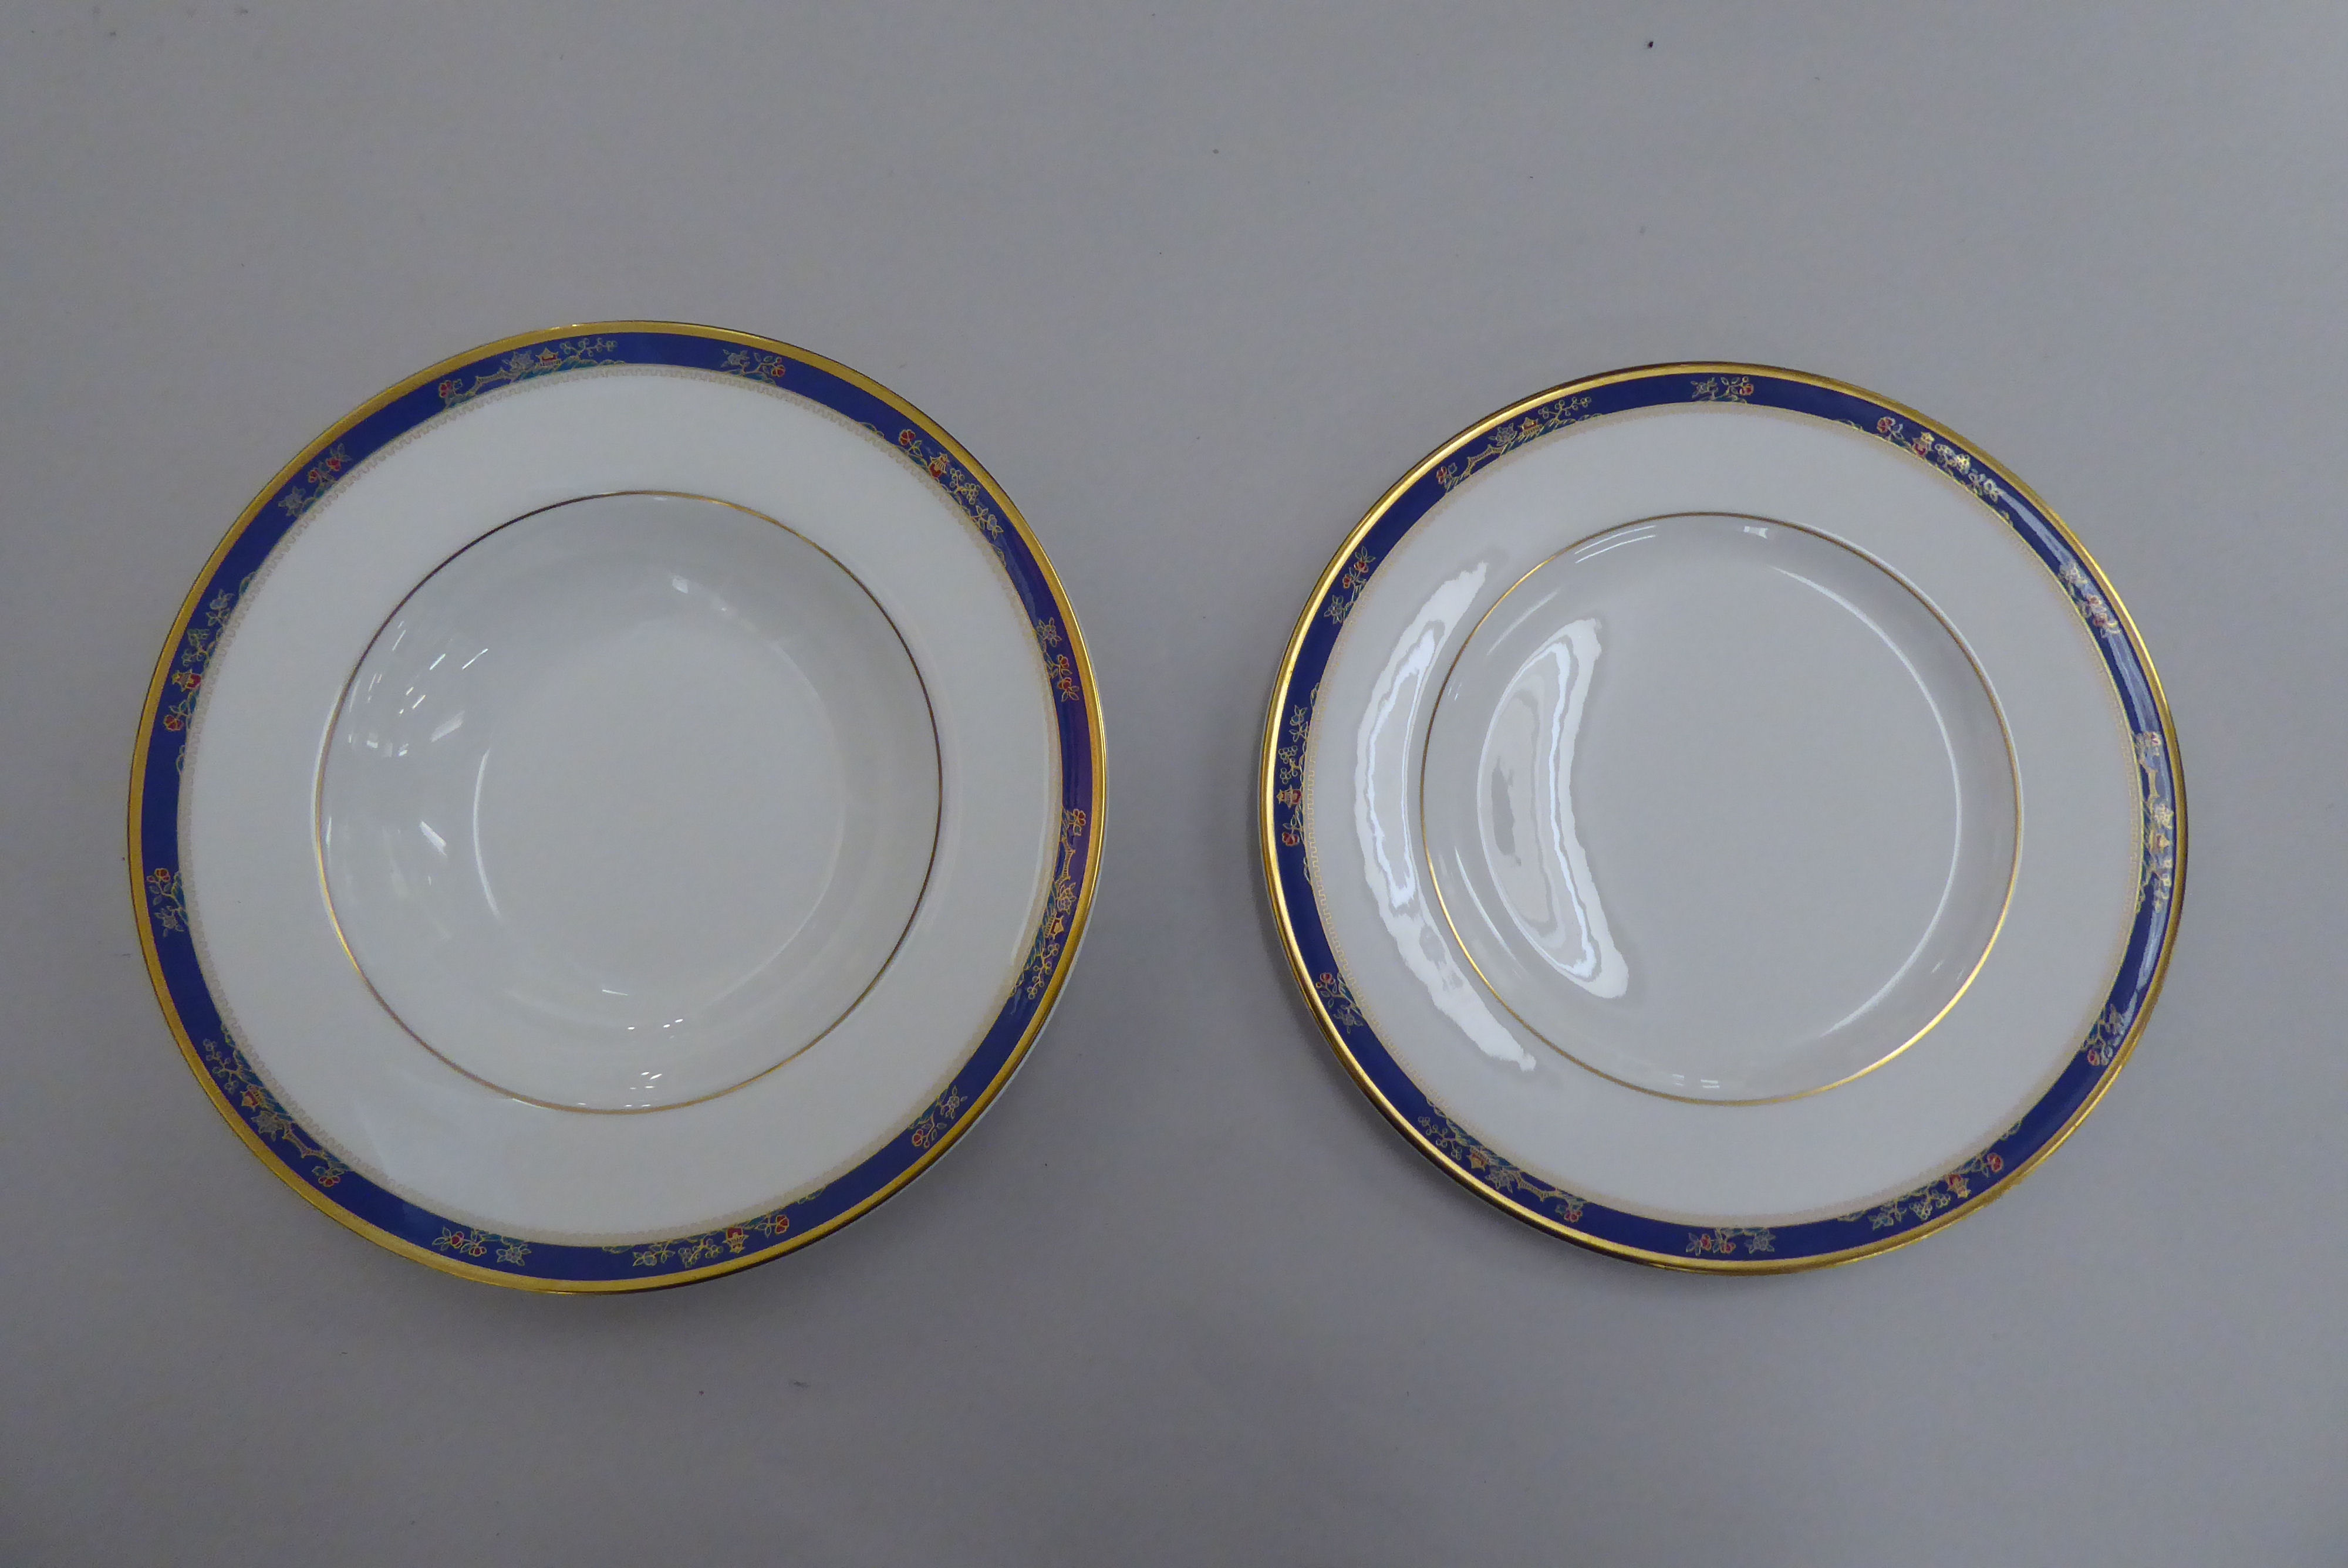 Royal Doulton fine bone china Cathay pattern tableware - Image 2 of 4